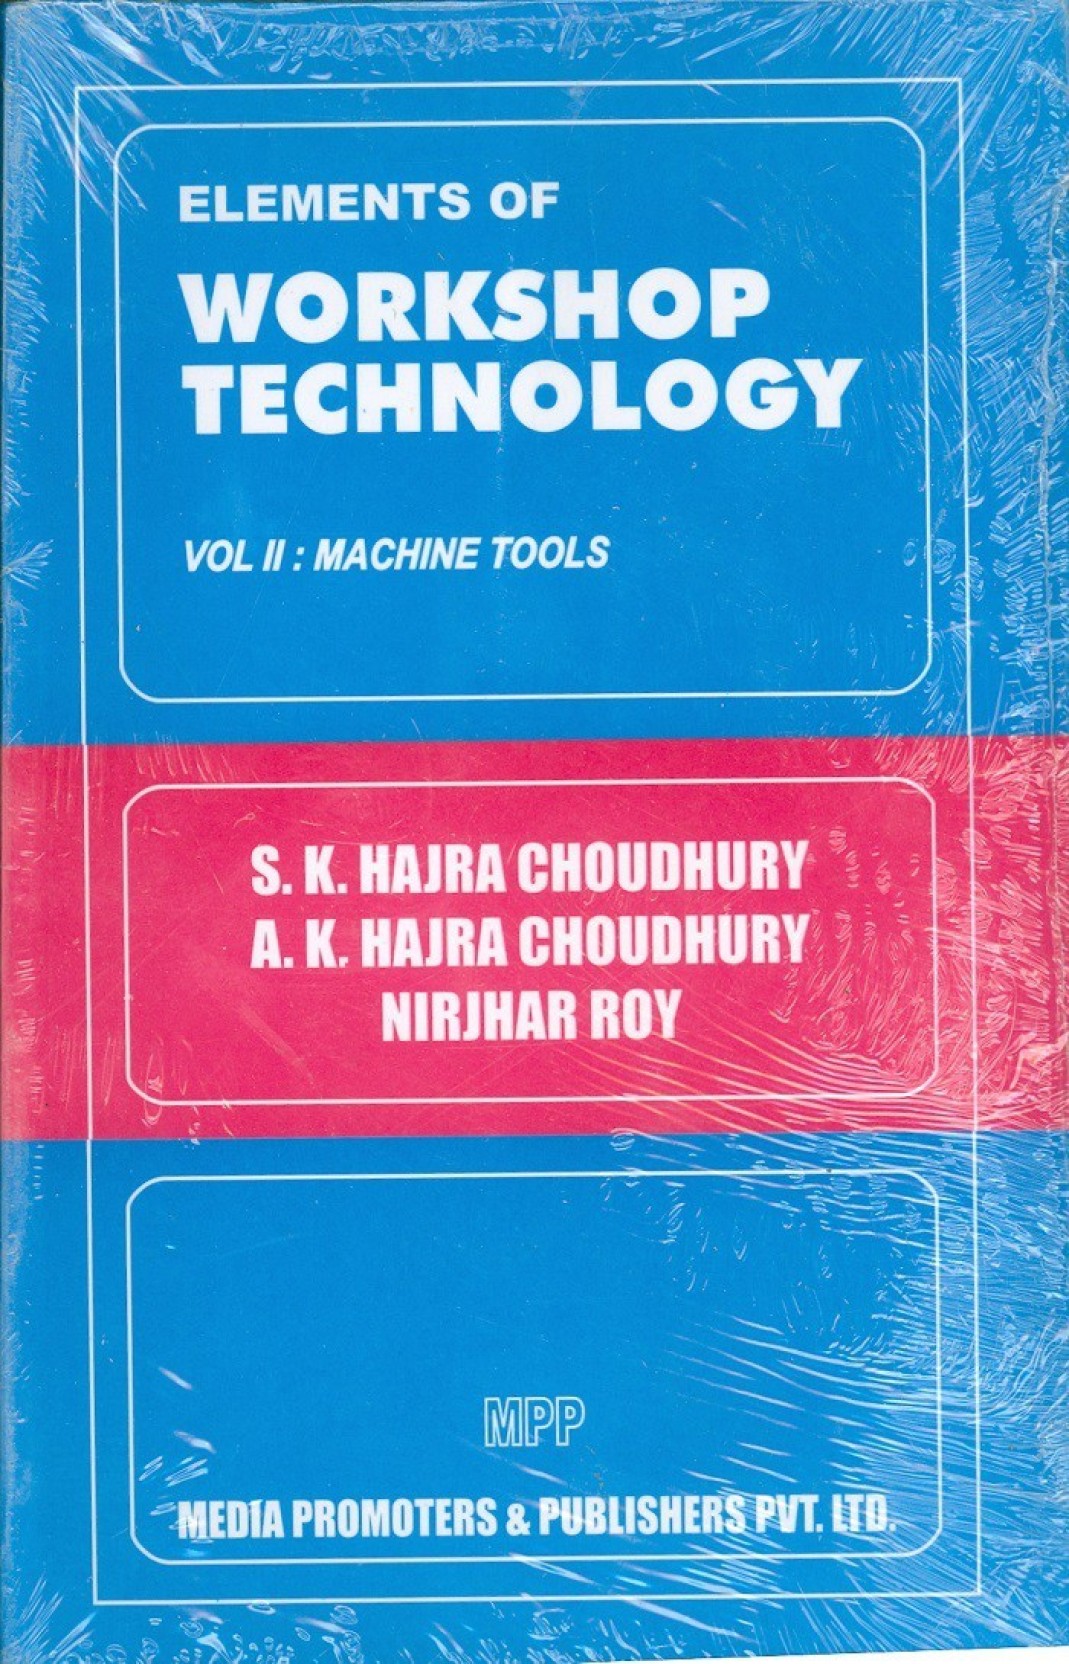 Workshop technology book pdf for diploma